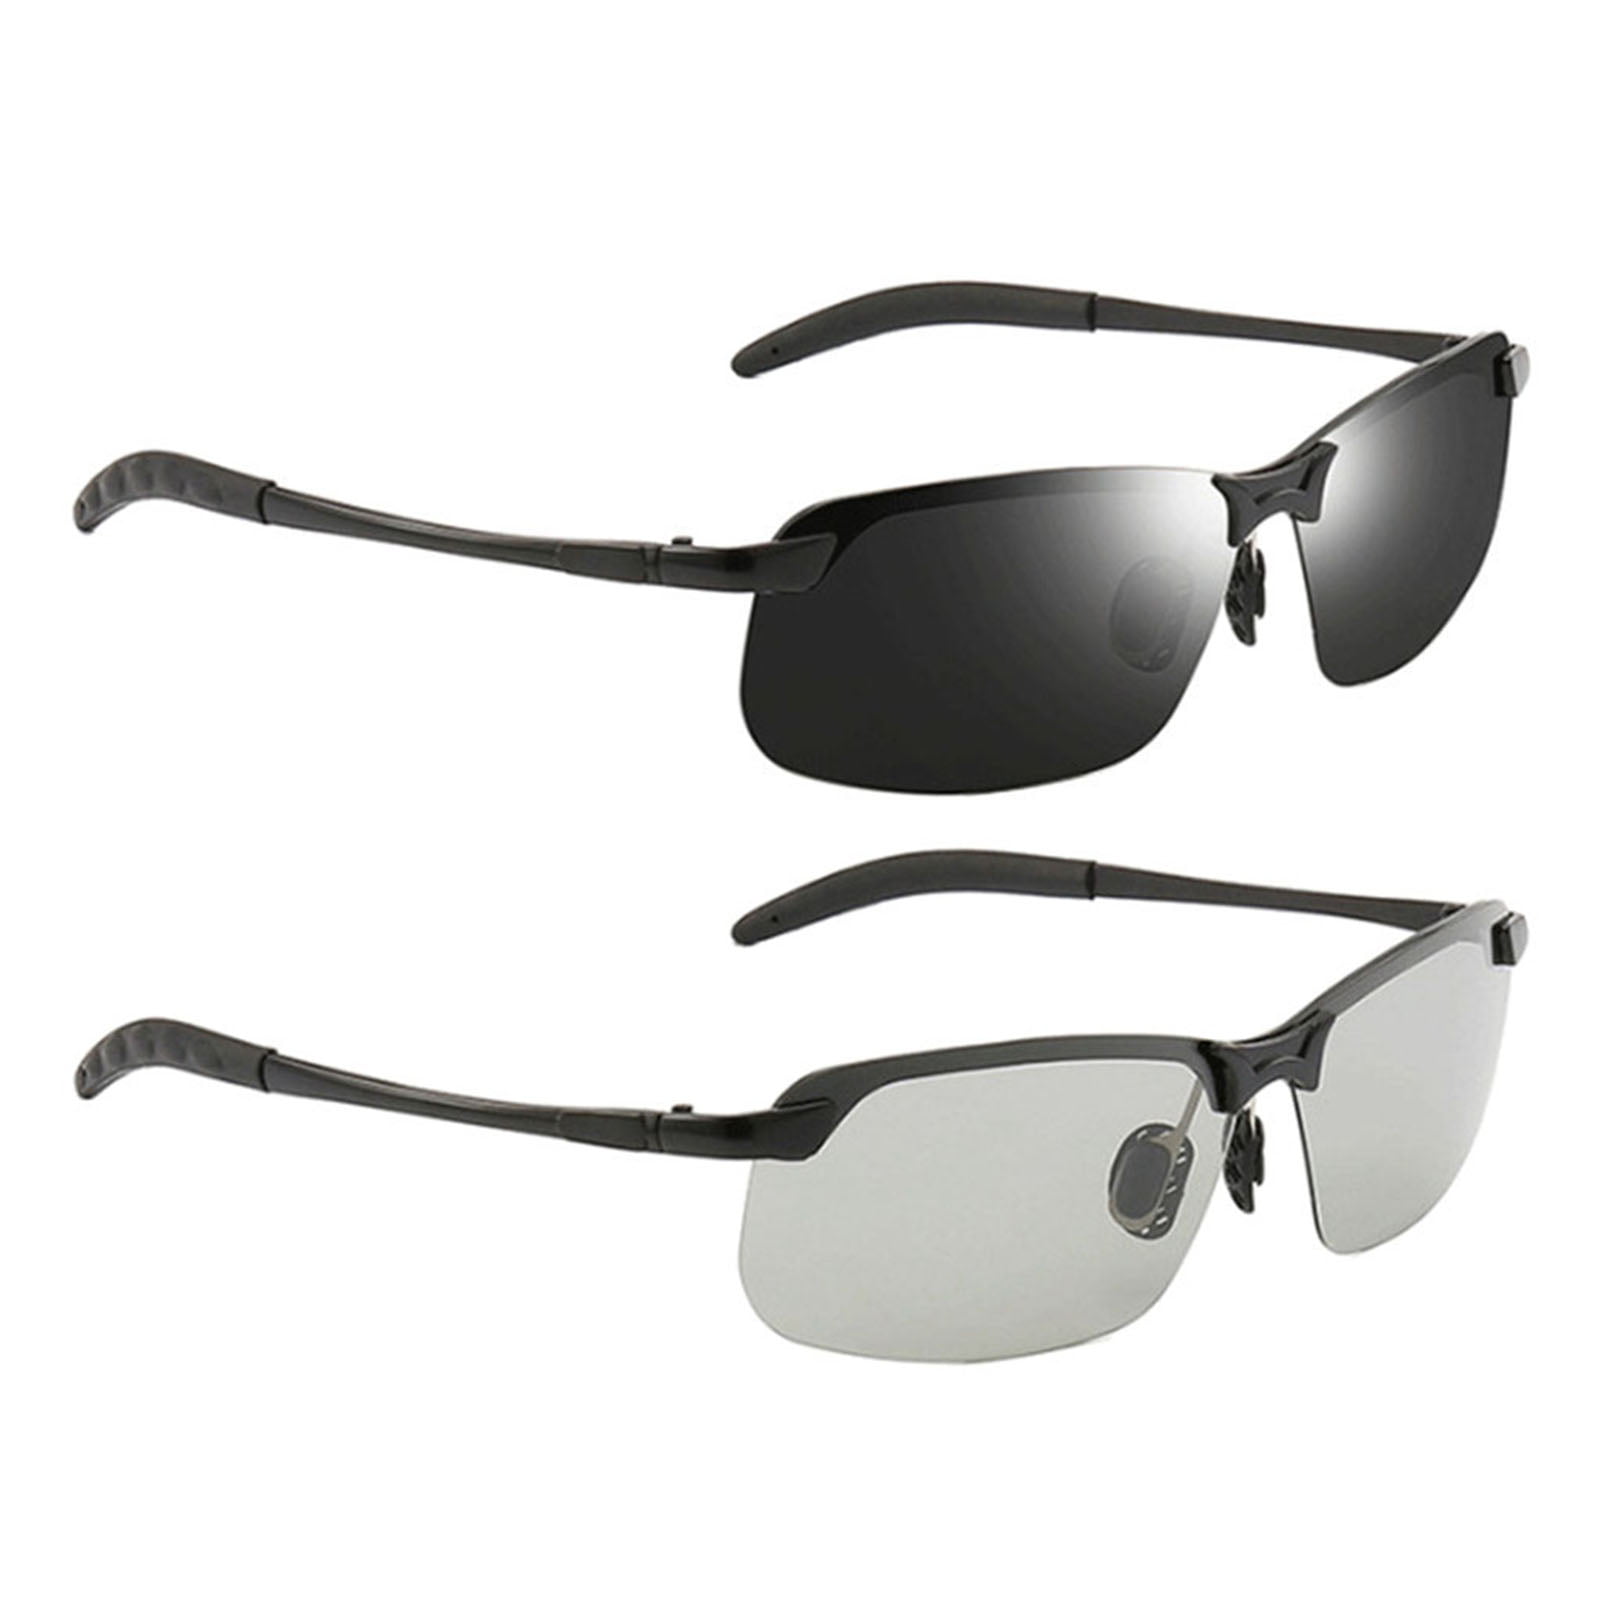 Men's Polarized Sunglasses Outdoor Driving Fishing Riding Square Glasses 2019